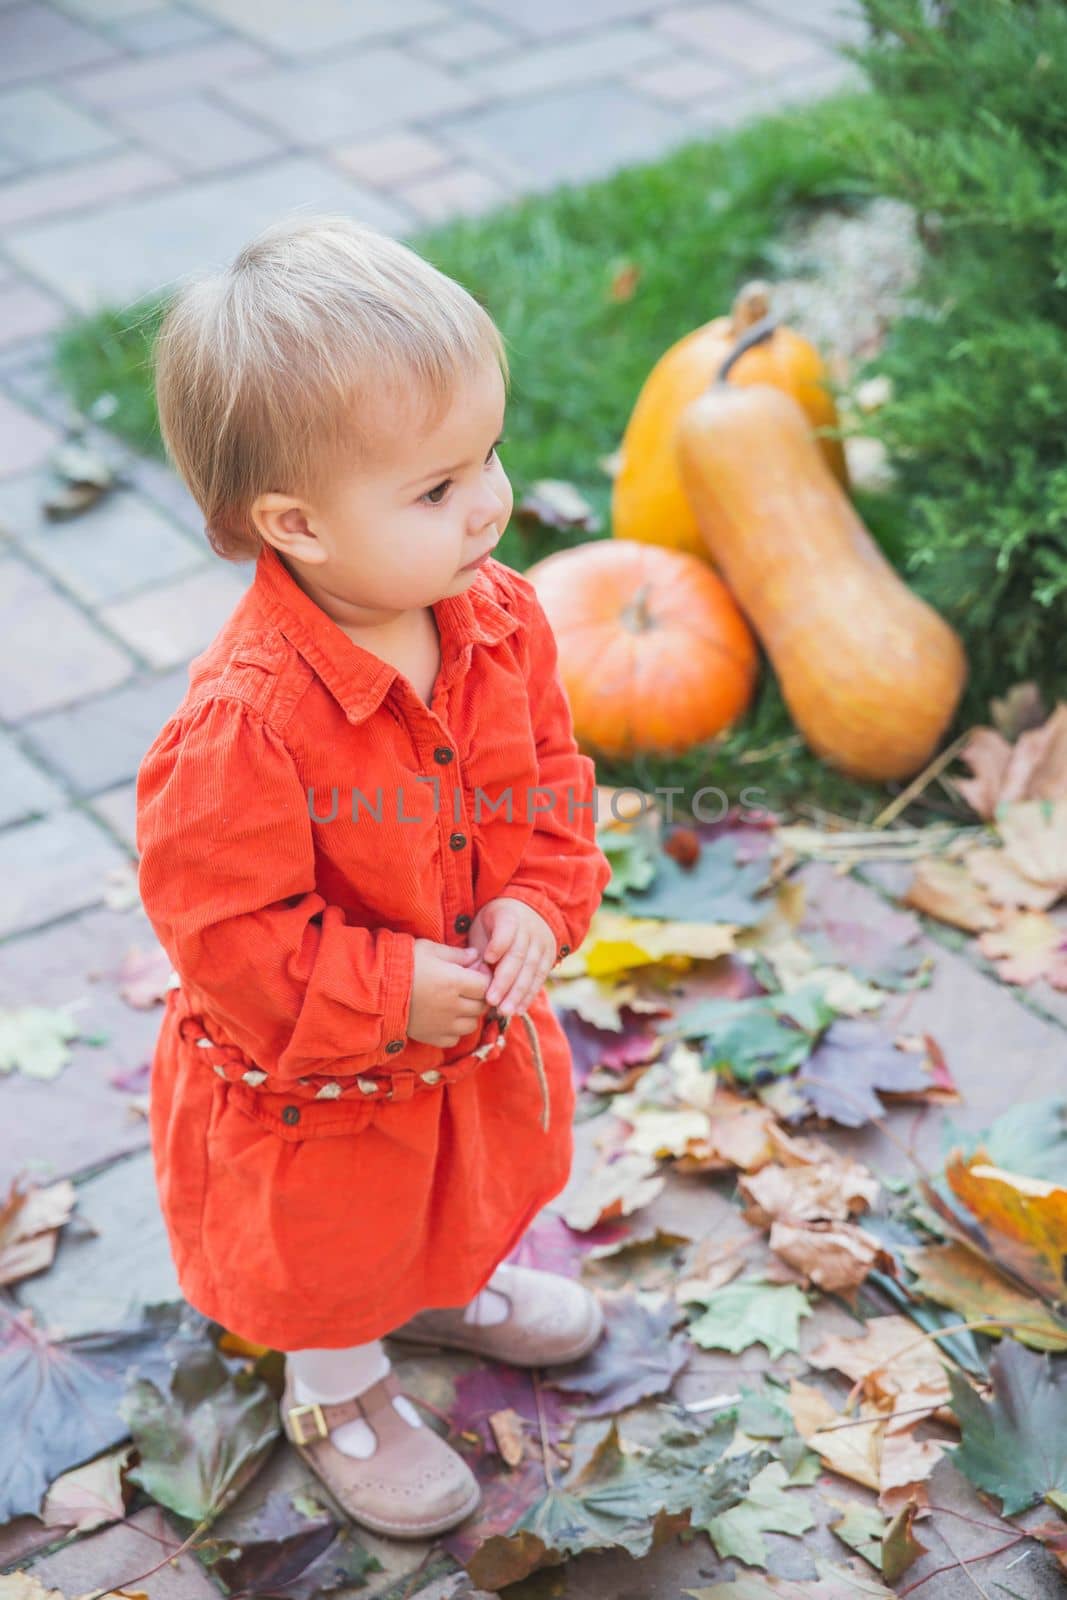 baby in red dress stands near pumpkins on halloween by Viktor_Osypenko